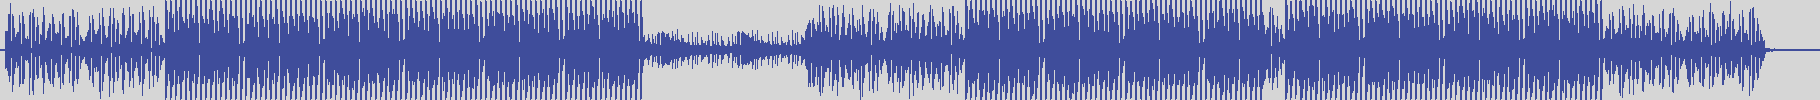 nf_boyz_records [NFY082] Marius Royce - Bannerman [Onda Deep Mix] audio wave form